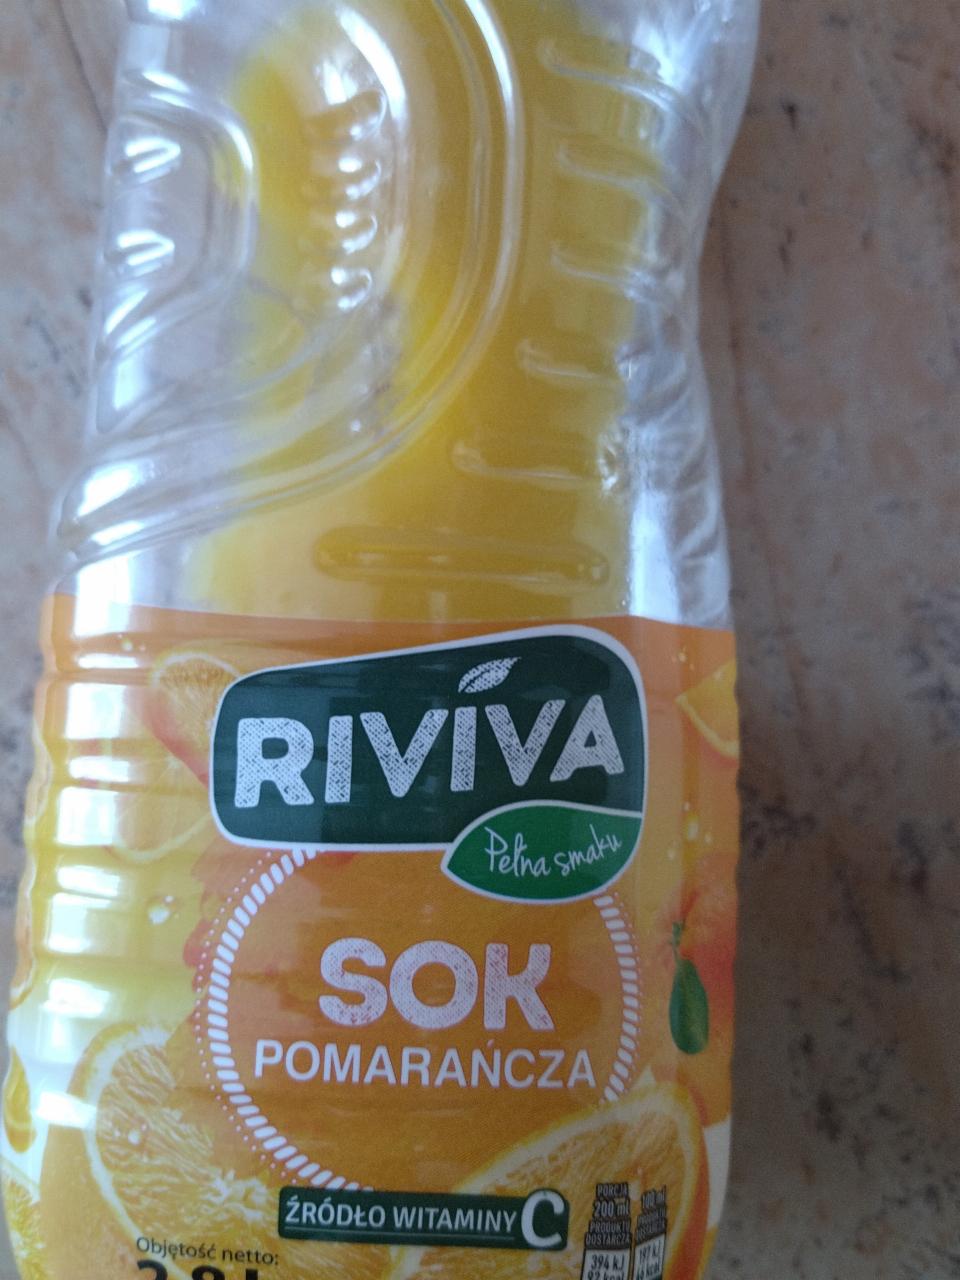 Zdjęcia - Sok pomarańcza Riviva